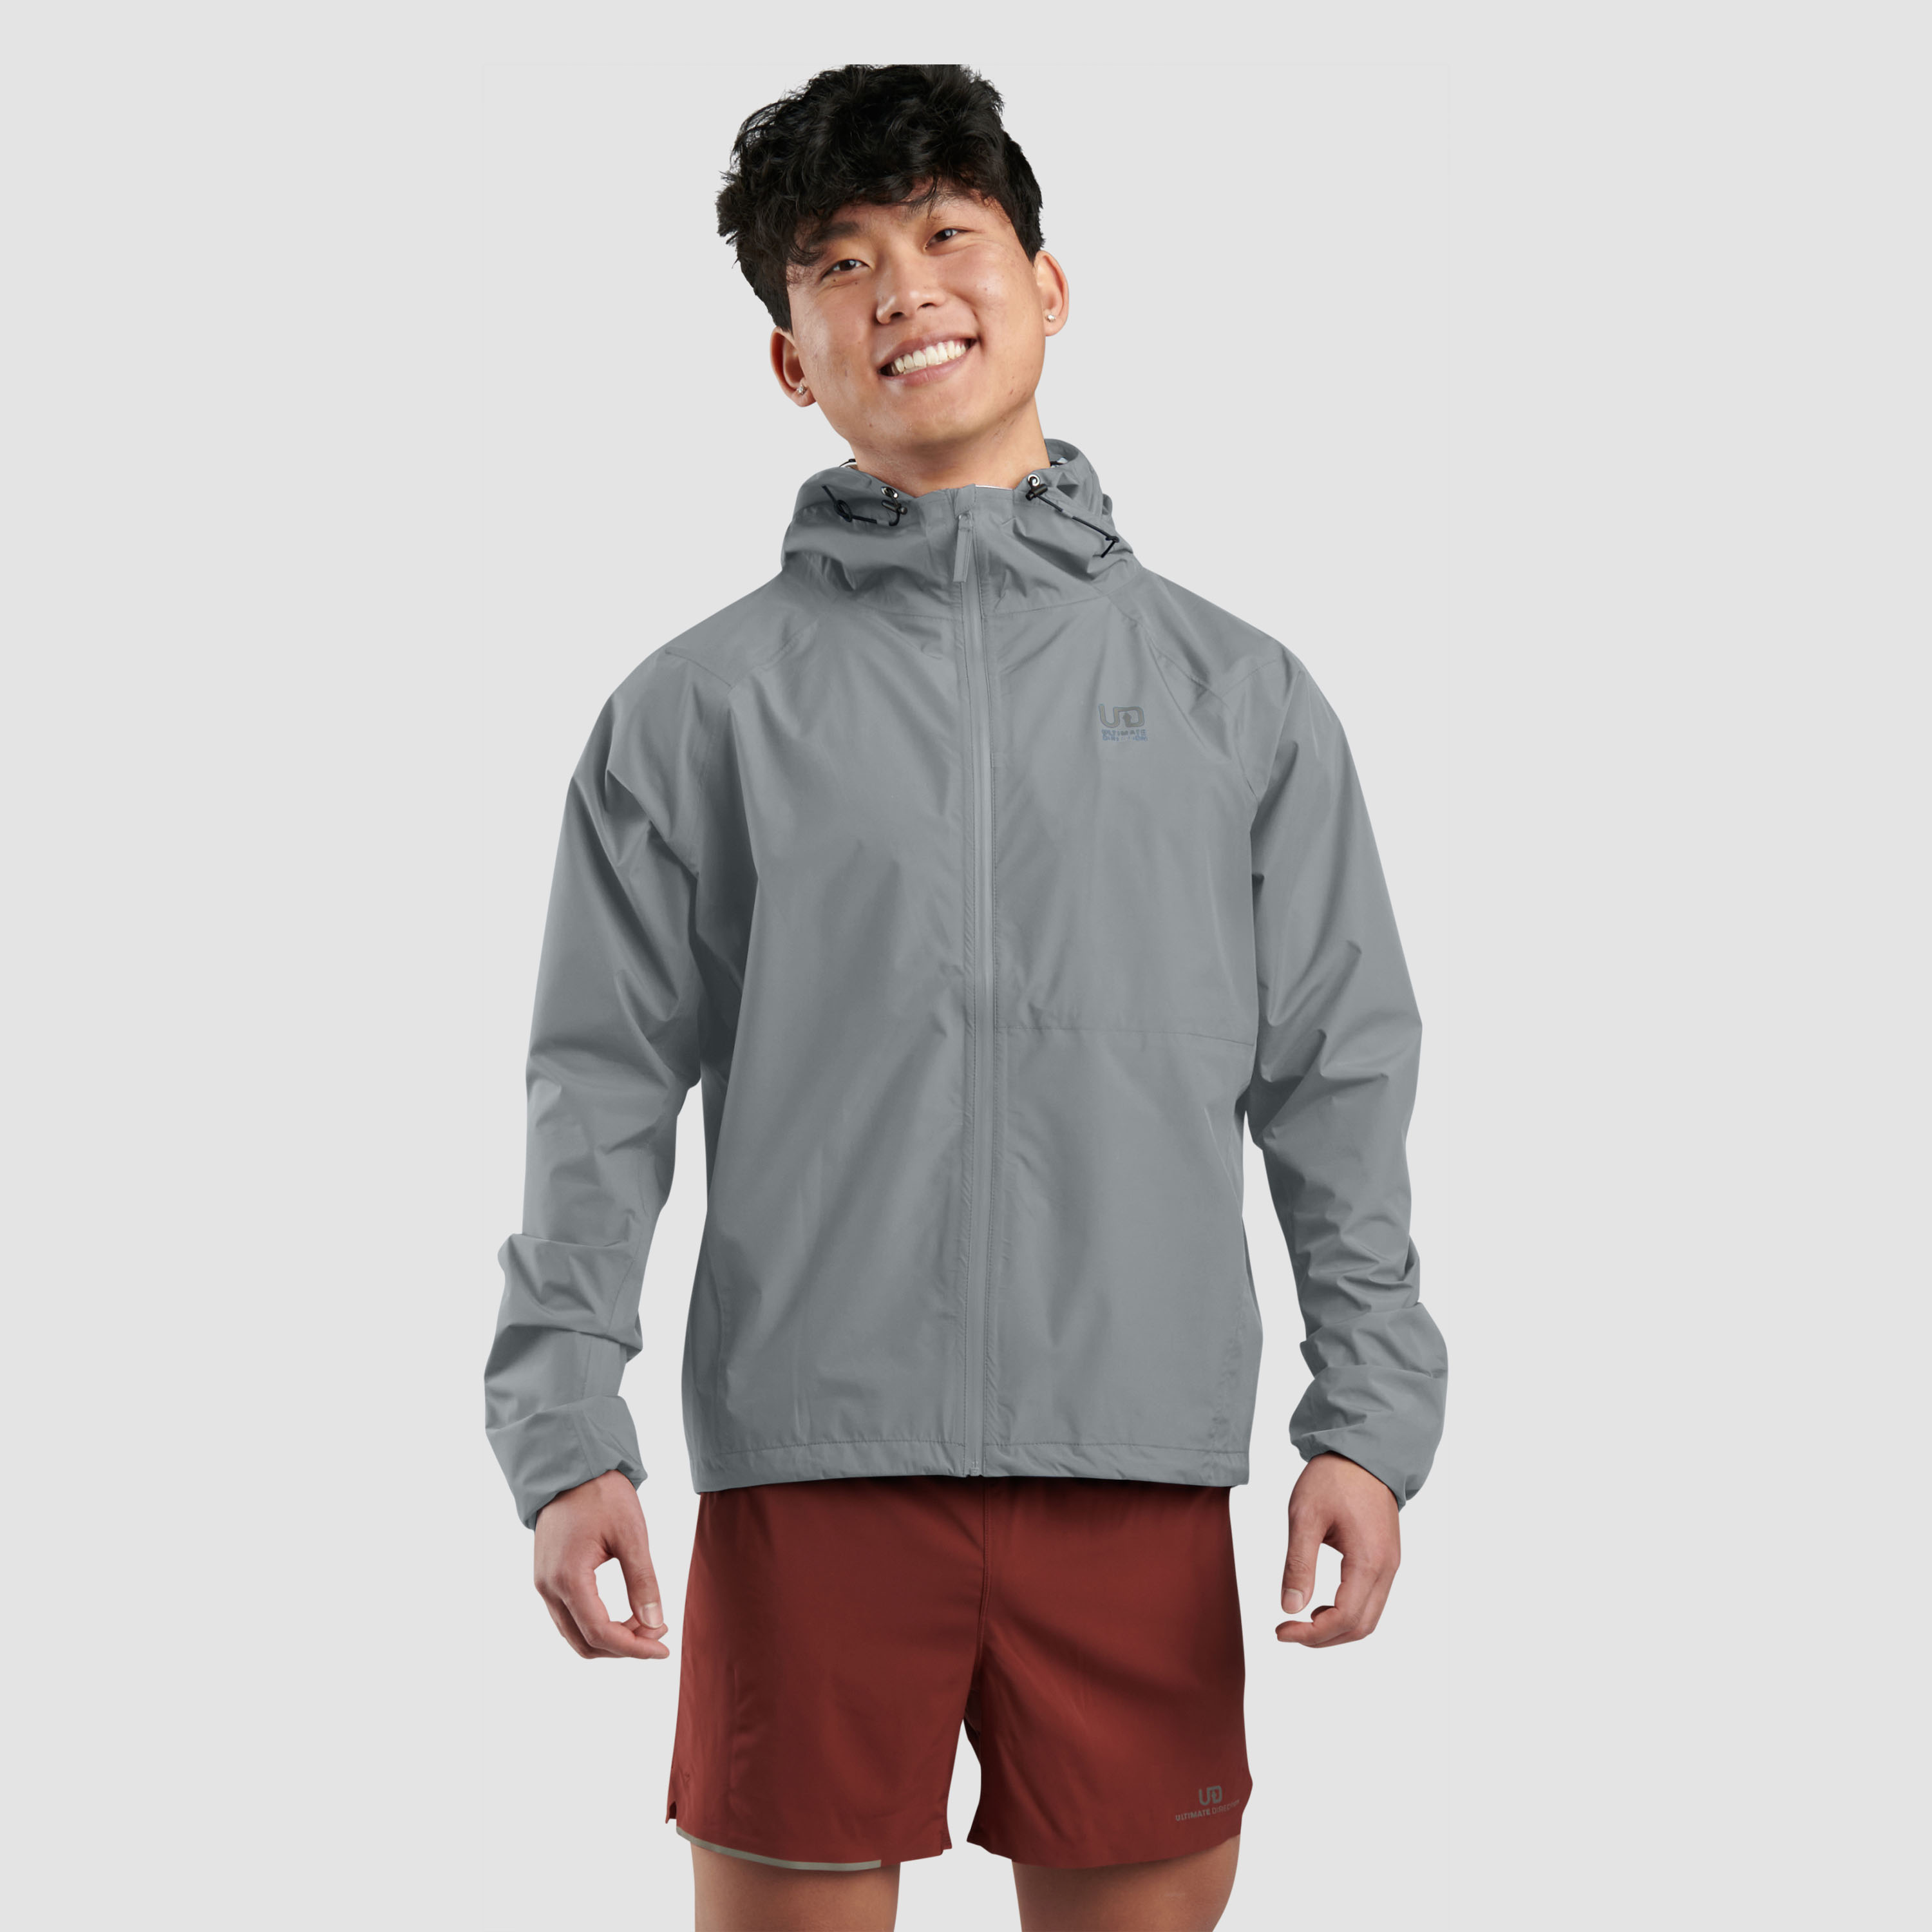 Ultimate Direction Men's Deluge Jacket in Gray Size Large